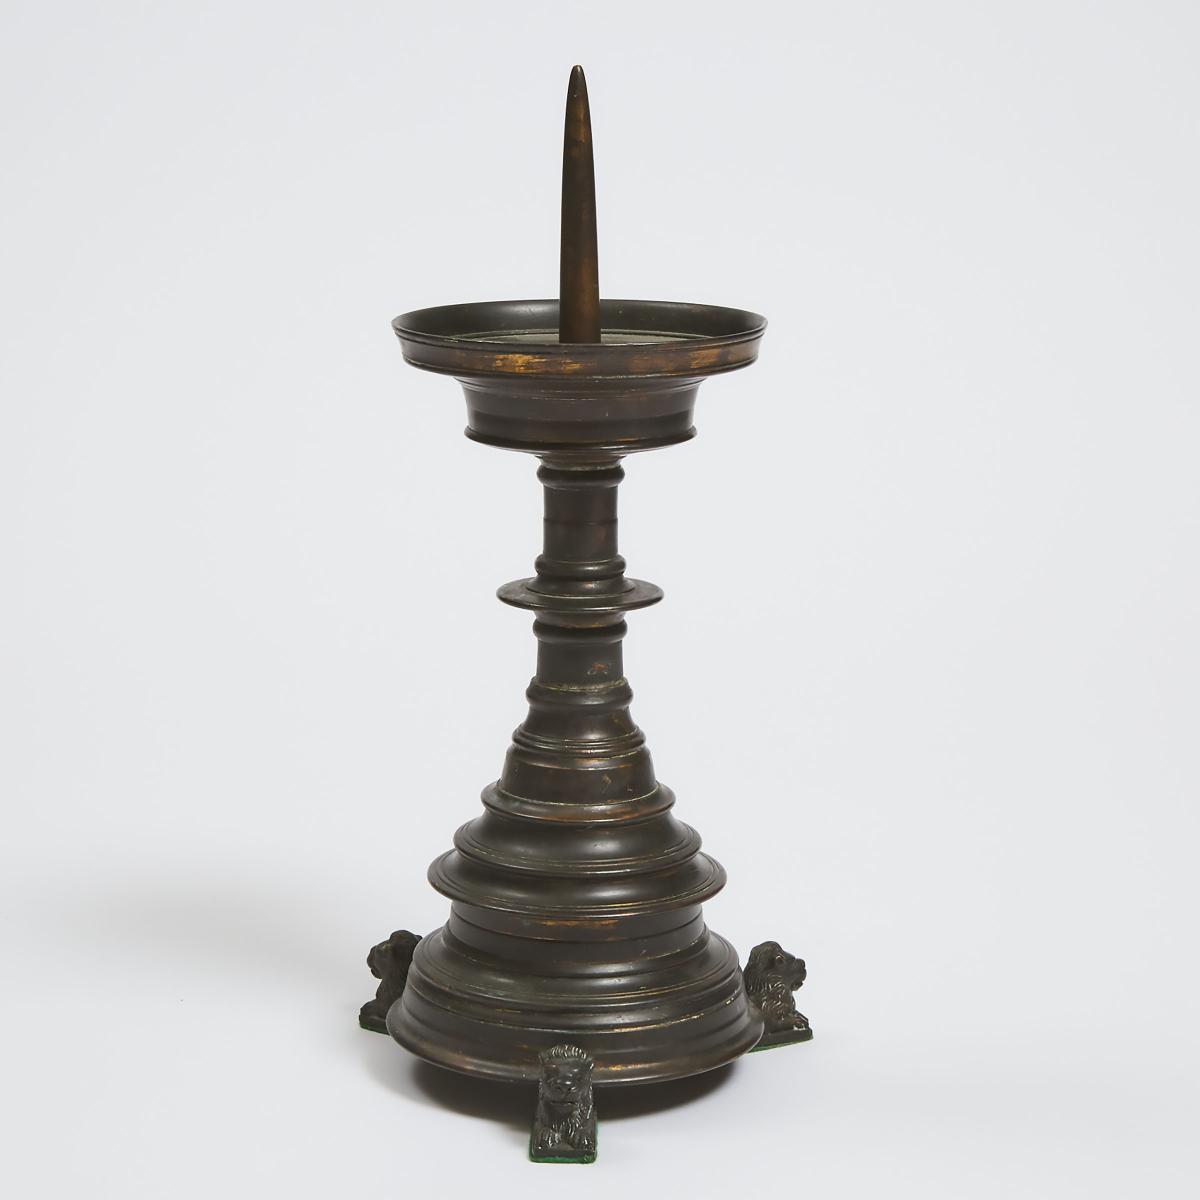 Netherlandish 17th Century Style Brass Pricket Candlestick, 19th century, height 13 in — 33 cm